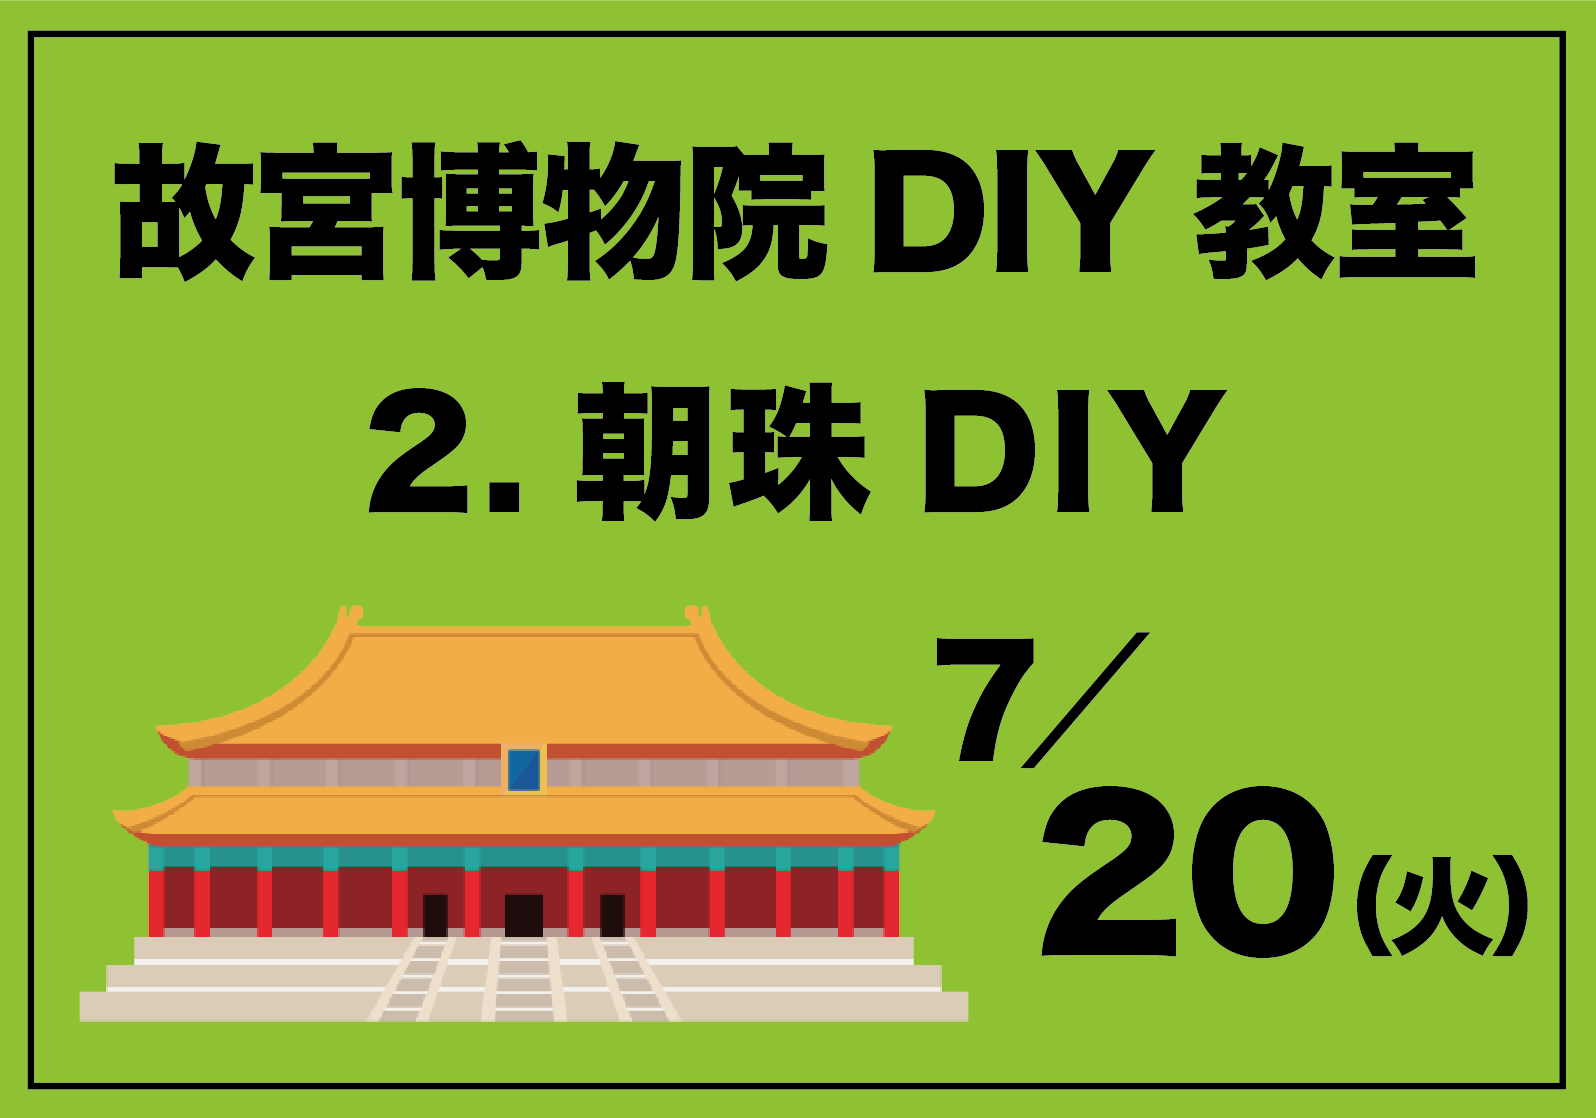 故宮博物院DIY教室「2.朝珠DIY」7月20日